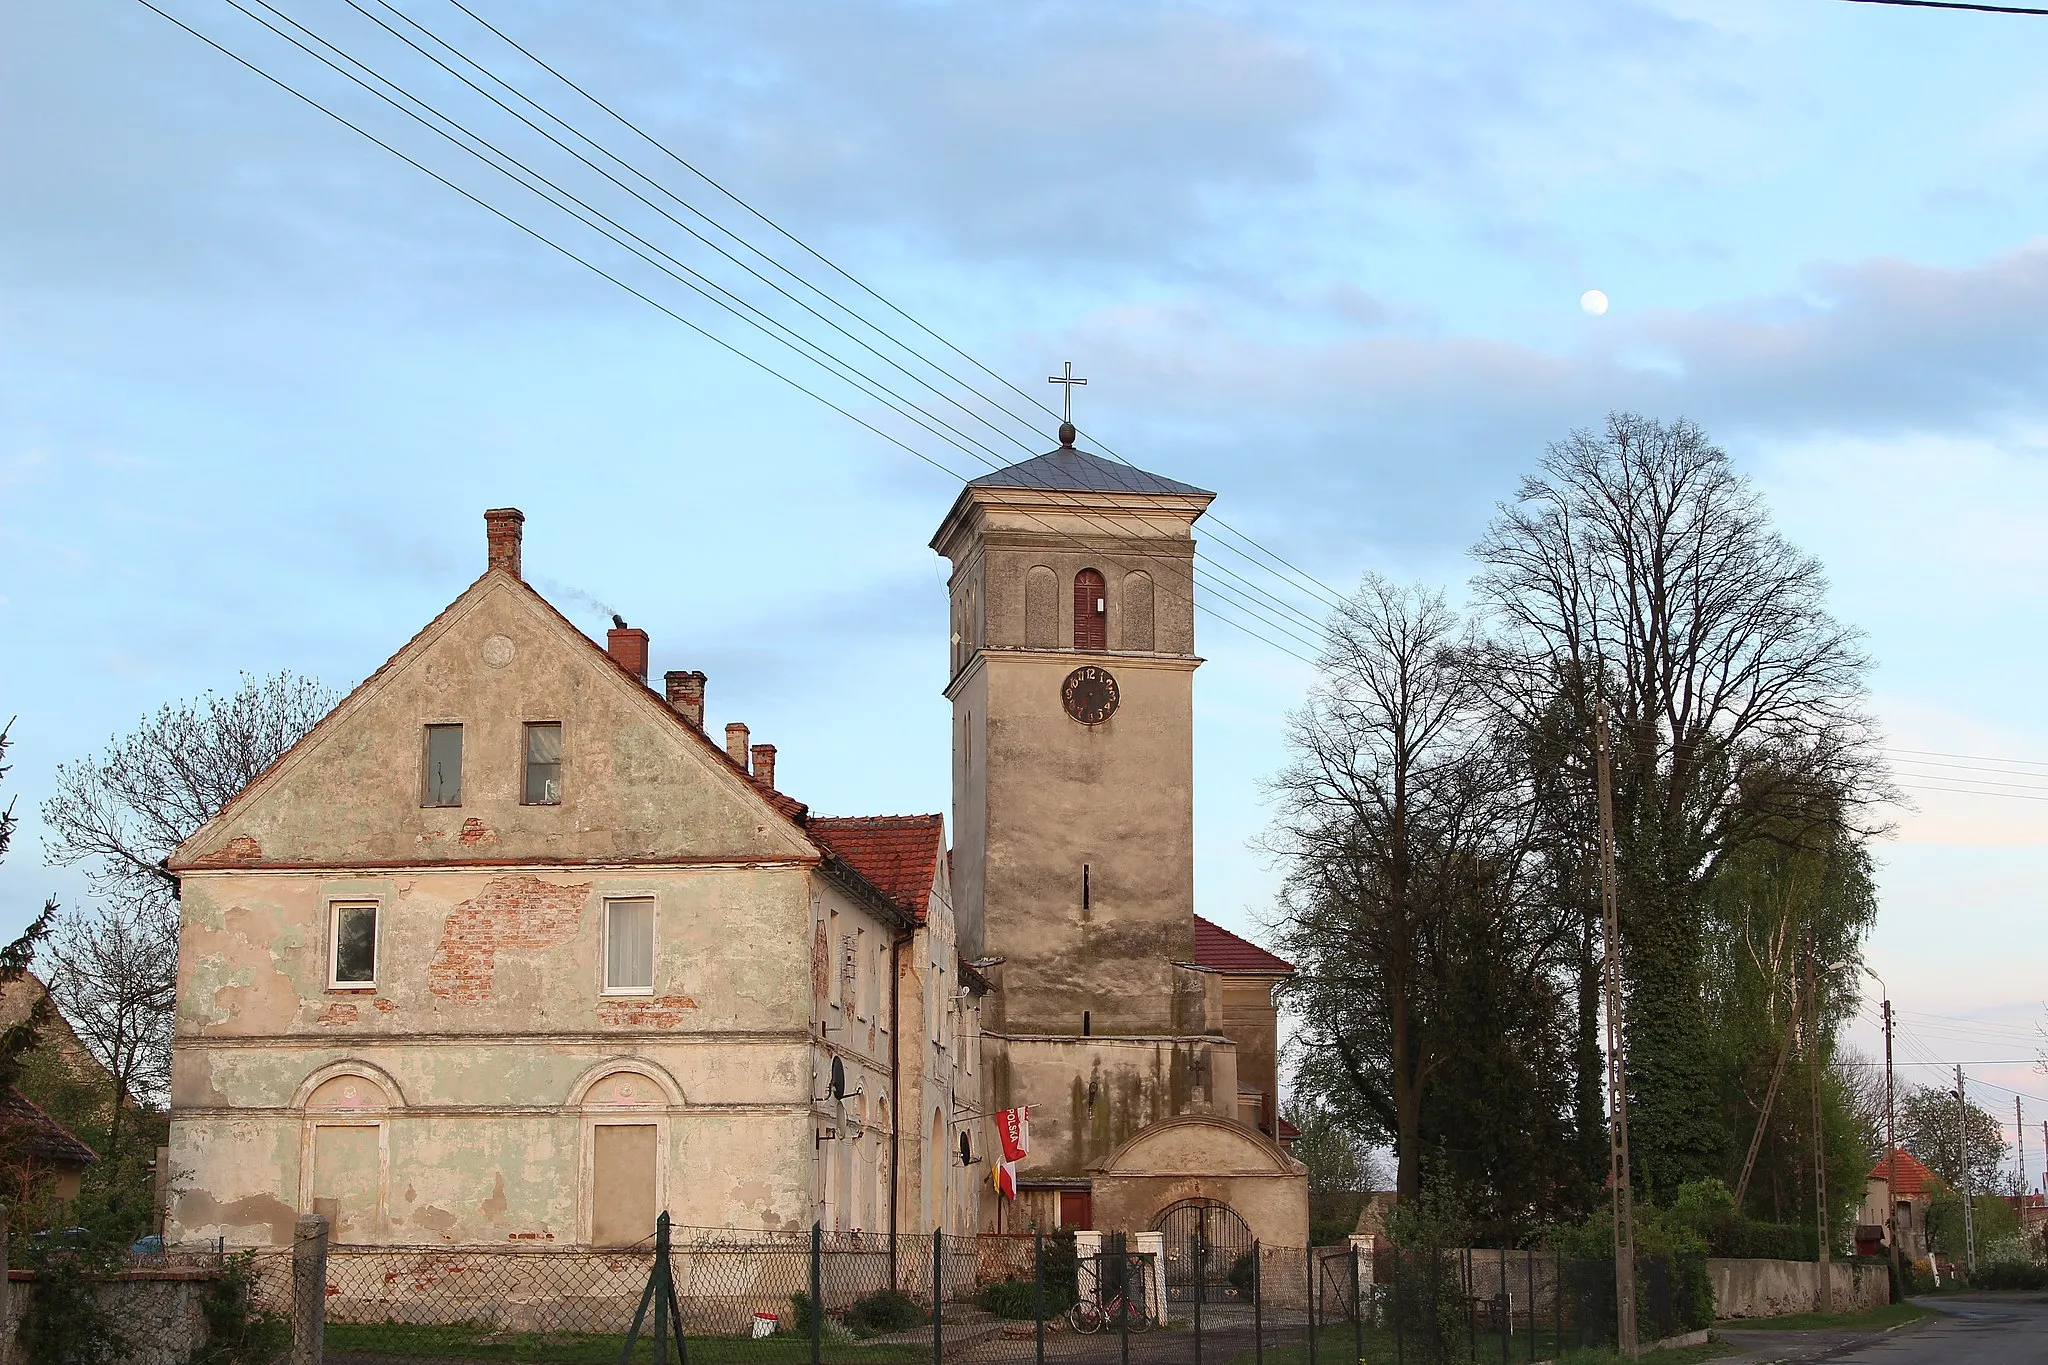 Photo showing: Village center and Saint Nicholas church in Pichorowice